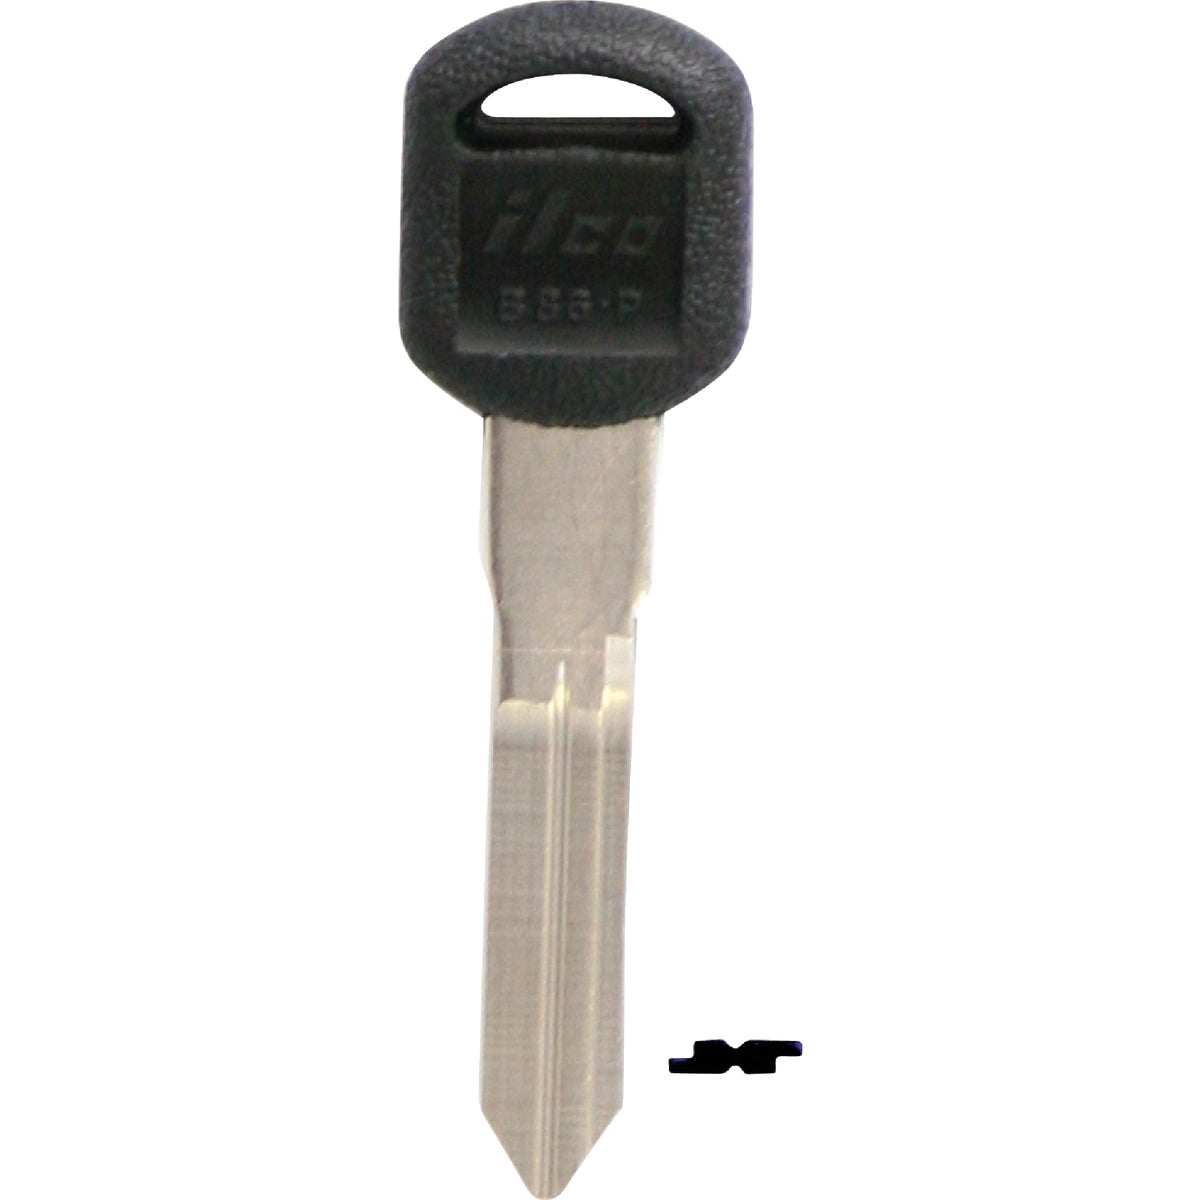 ILCO GM Nickel Plated Automotive Key, B86-P / B86P (5-Pack)